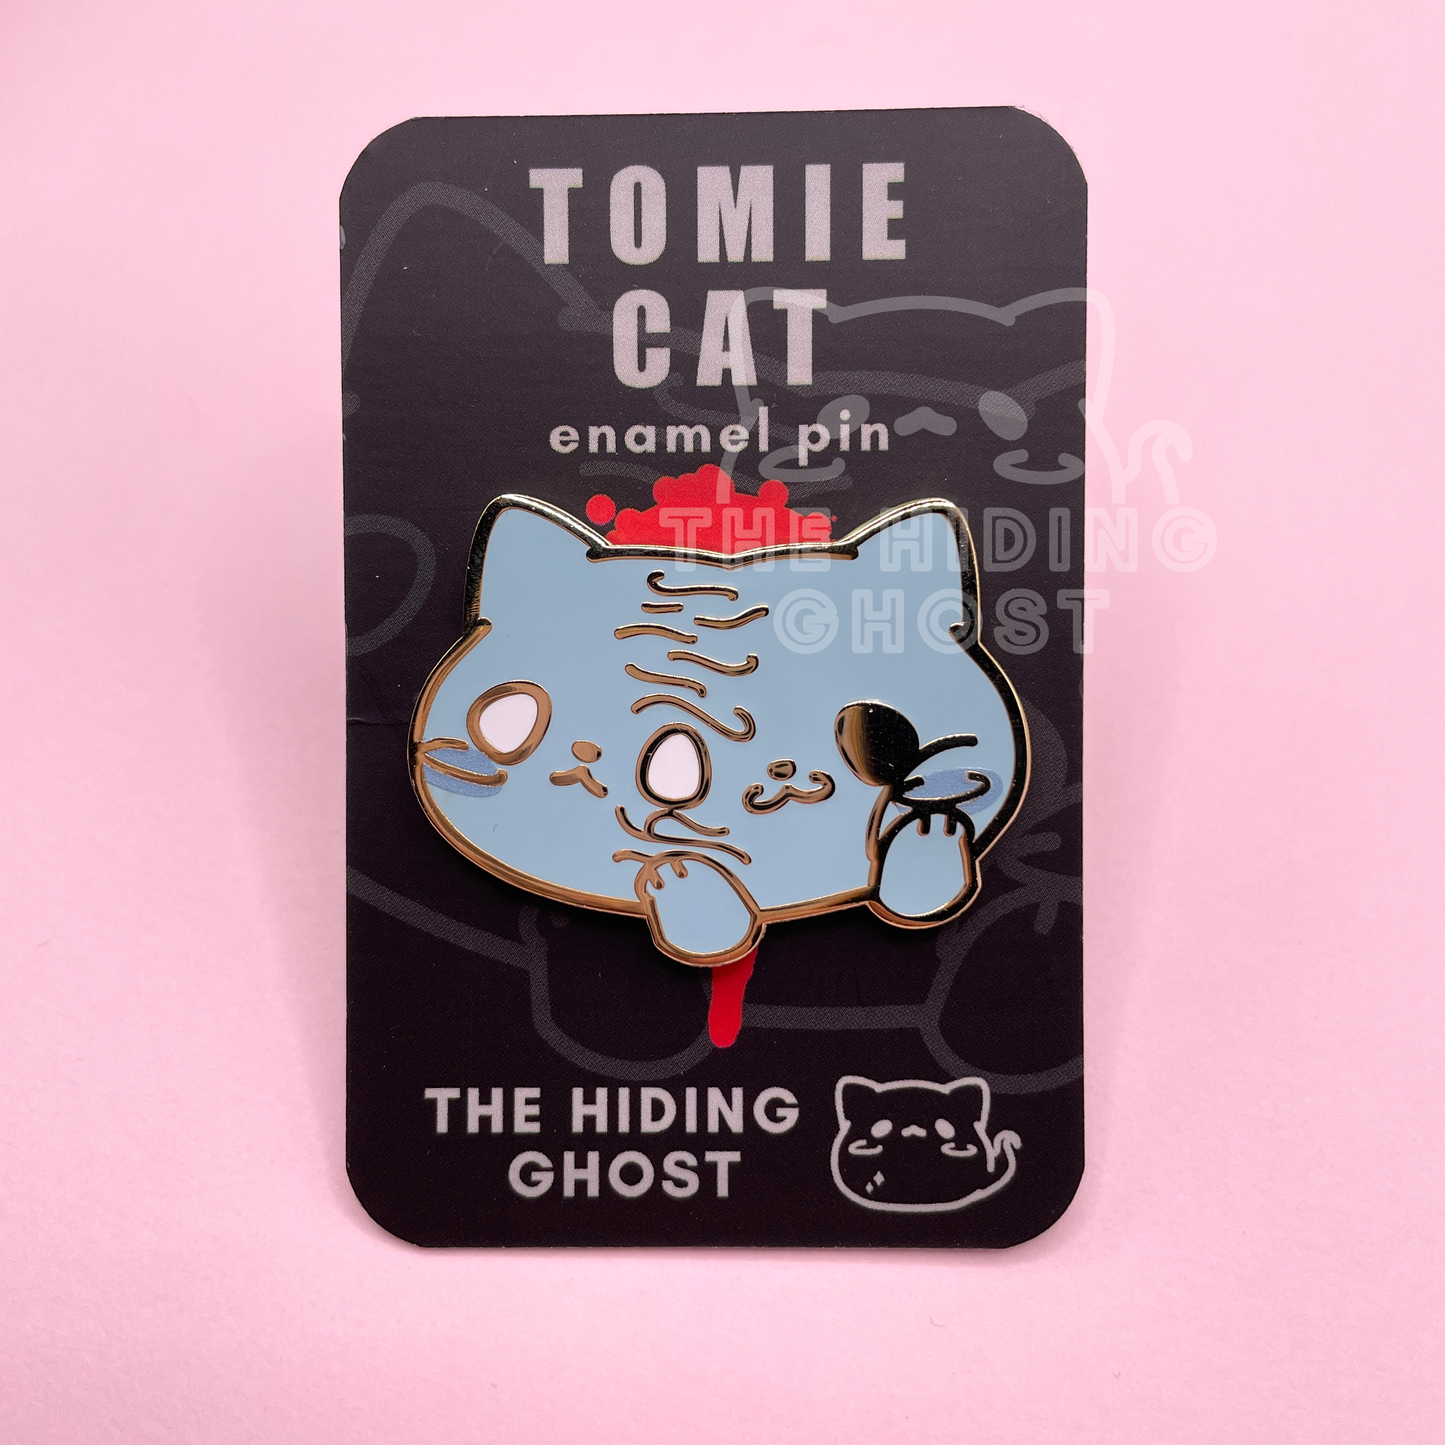 Tomie Cat Ghost Enamel Pin